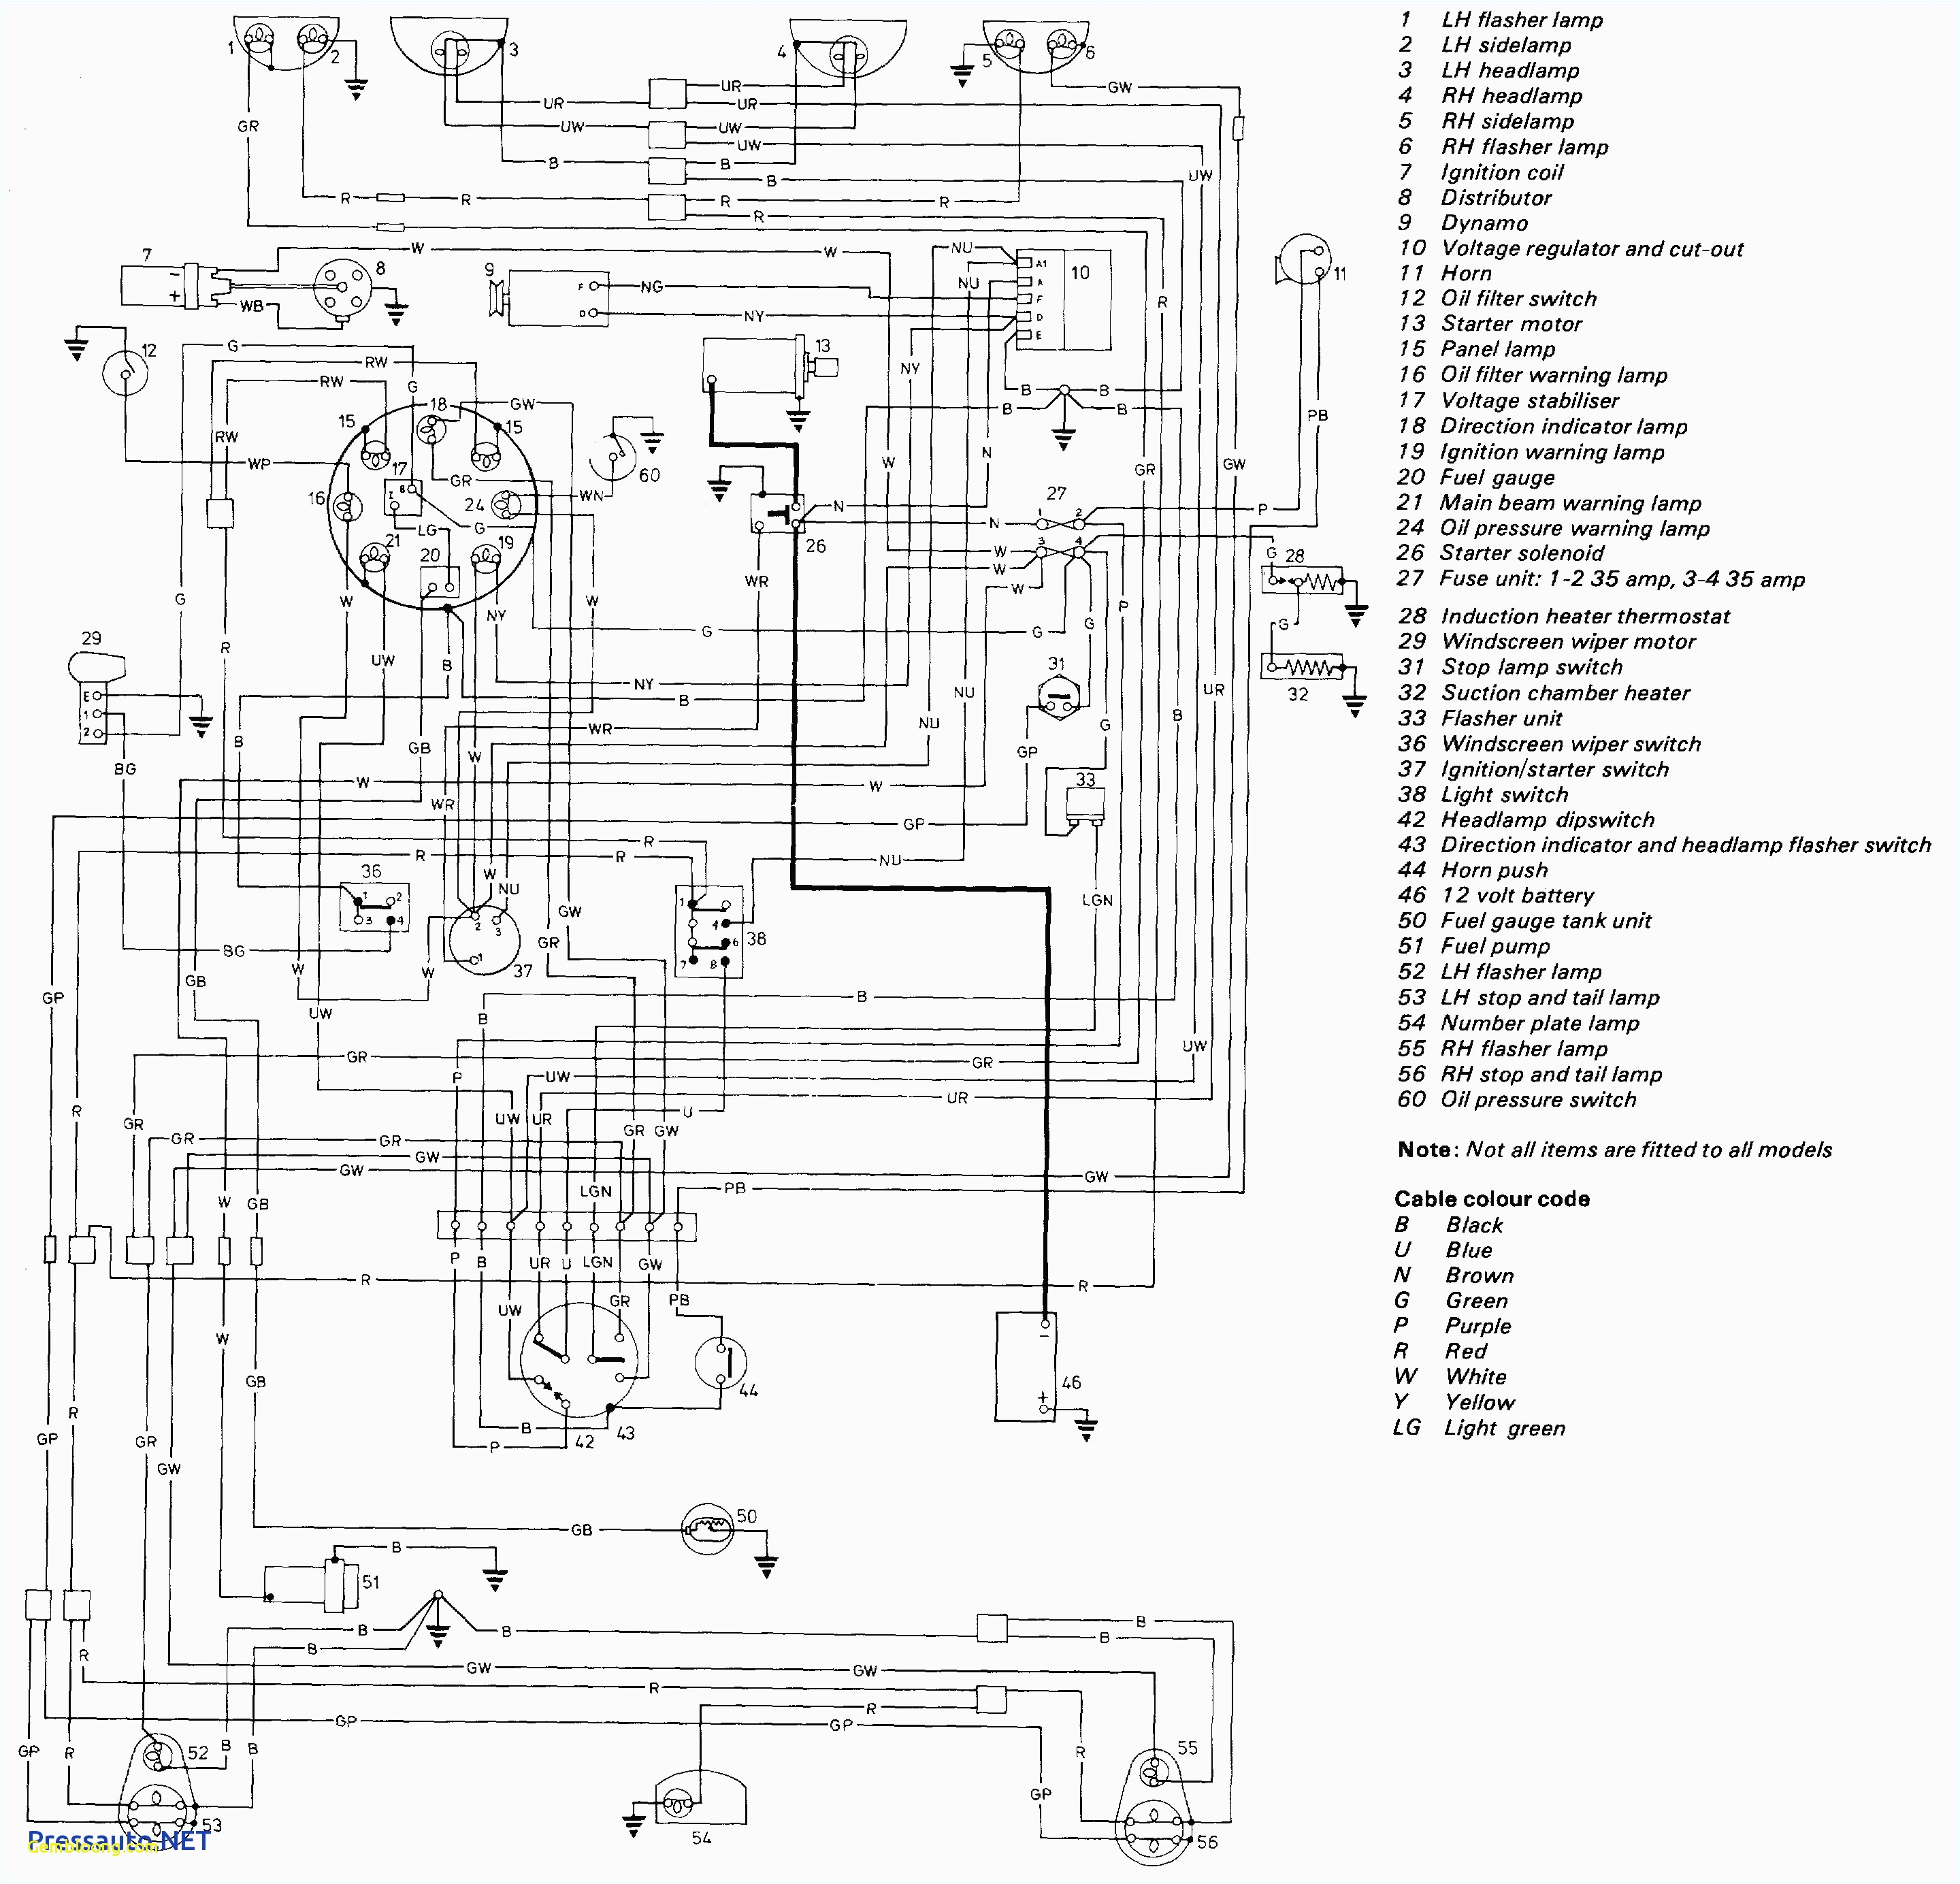 download bmw e36 dme wiring diagram e46 wiring diagram e46 dimensions z8 wiring diagram e34